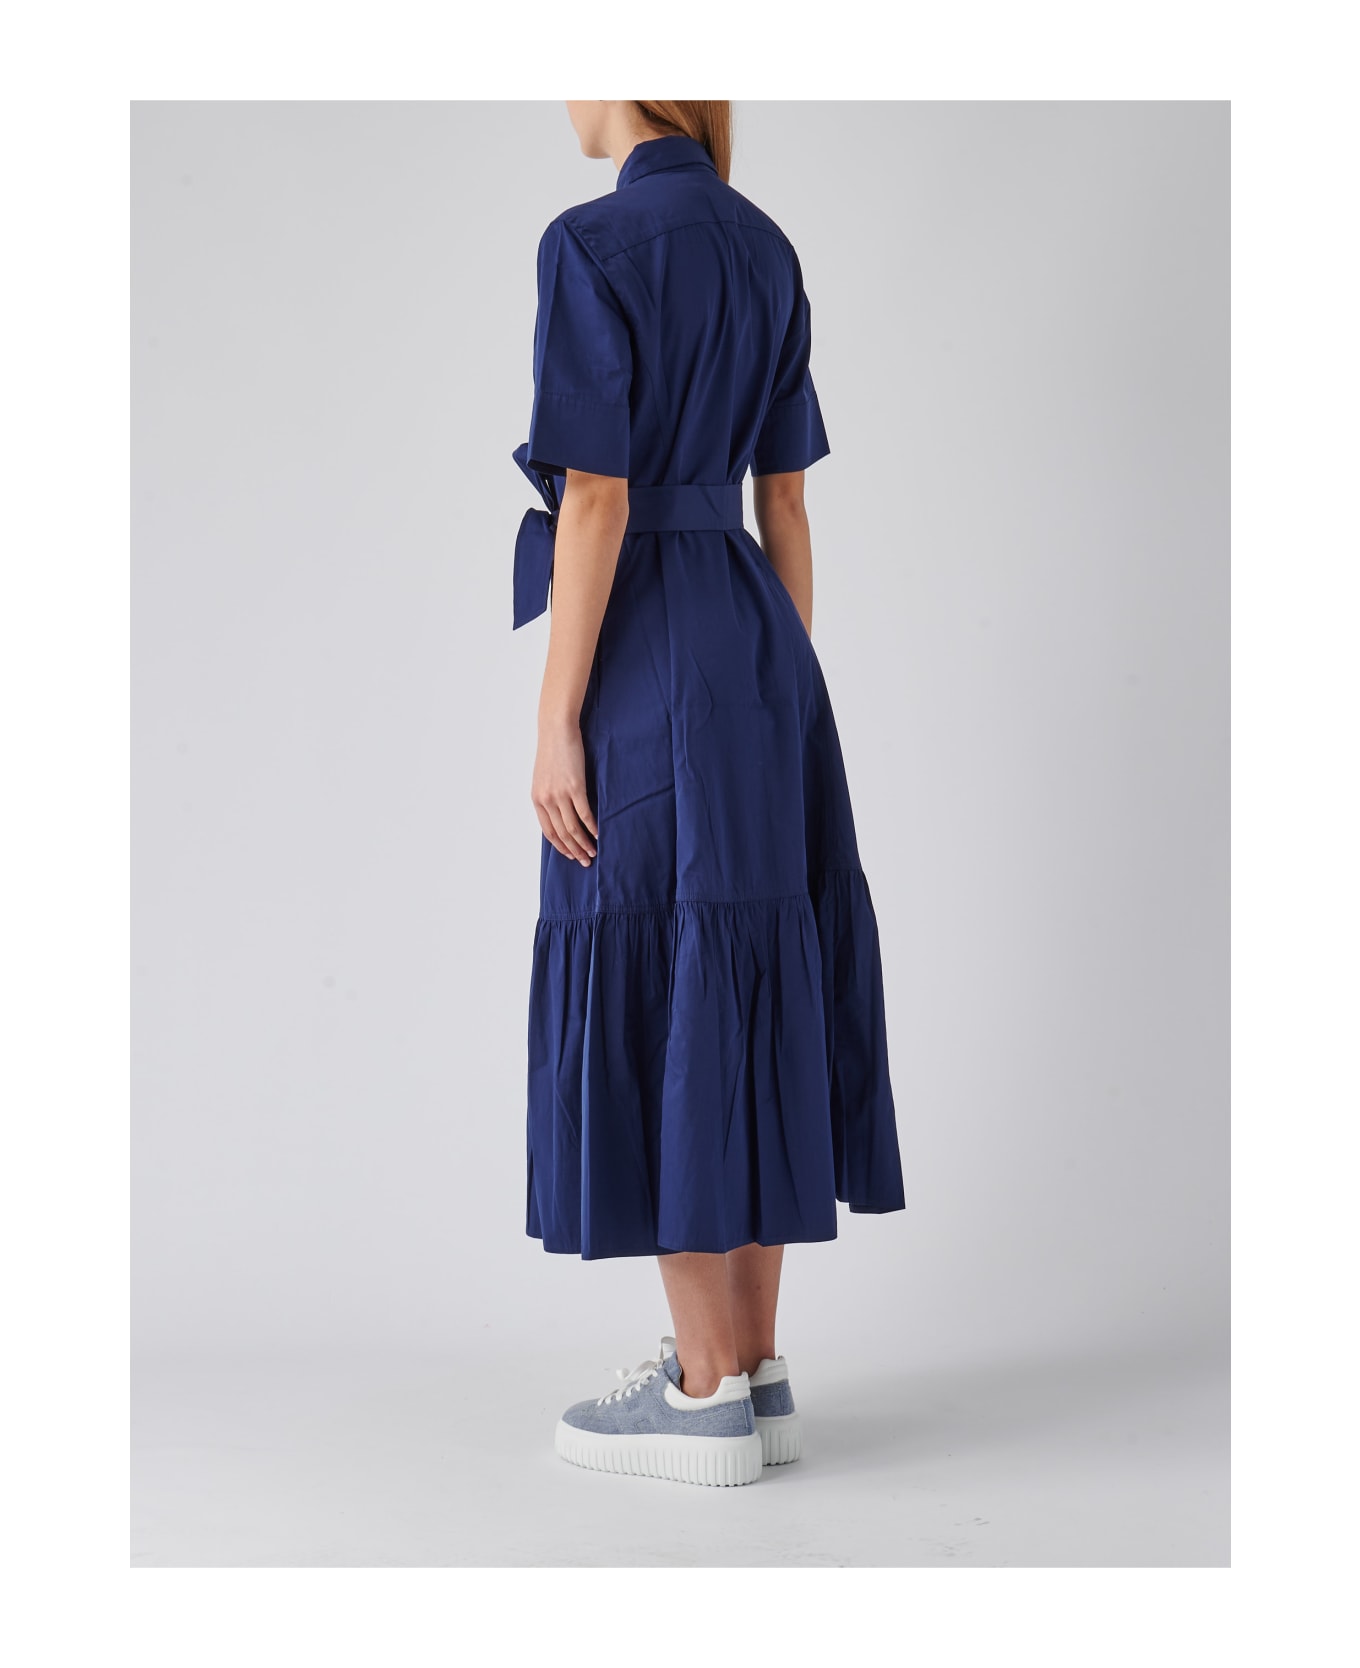 Polo Ralph Lauren Cotton Dress - ROYAL